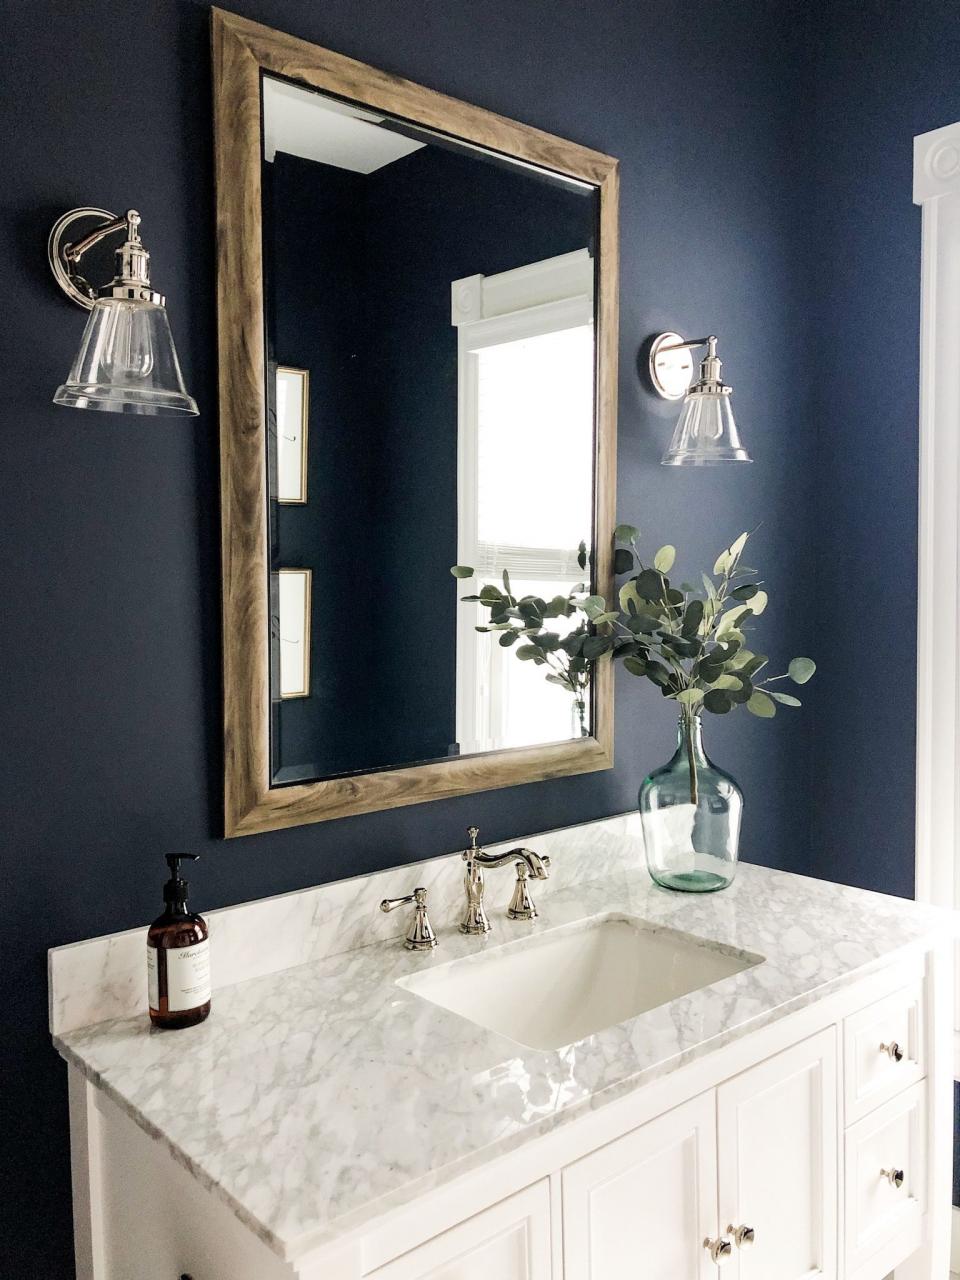 Deep blue bathroom paint color, powder room decor, bonus bathroom